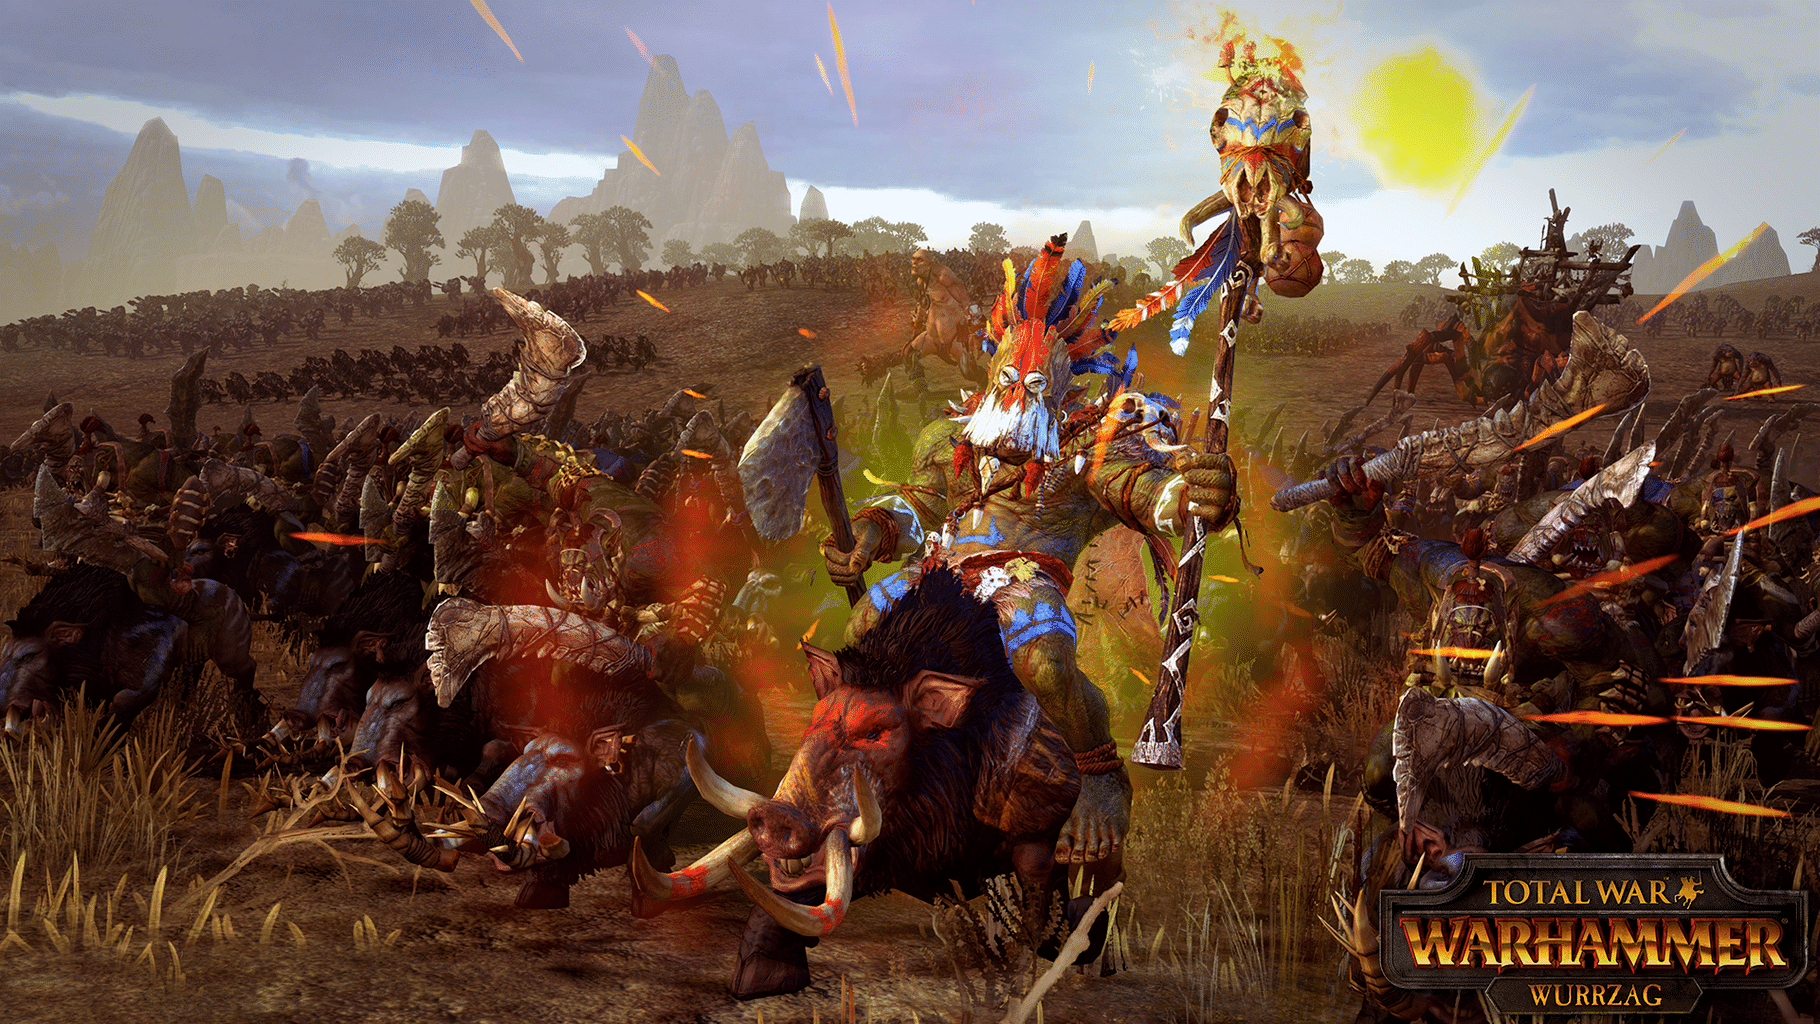 Total War: Warhammer - Wurrzag screenshot